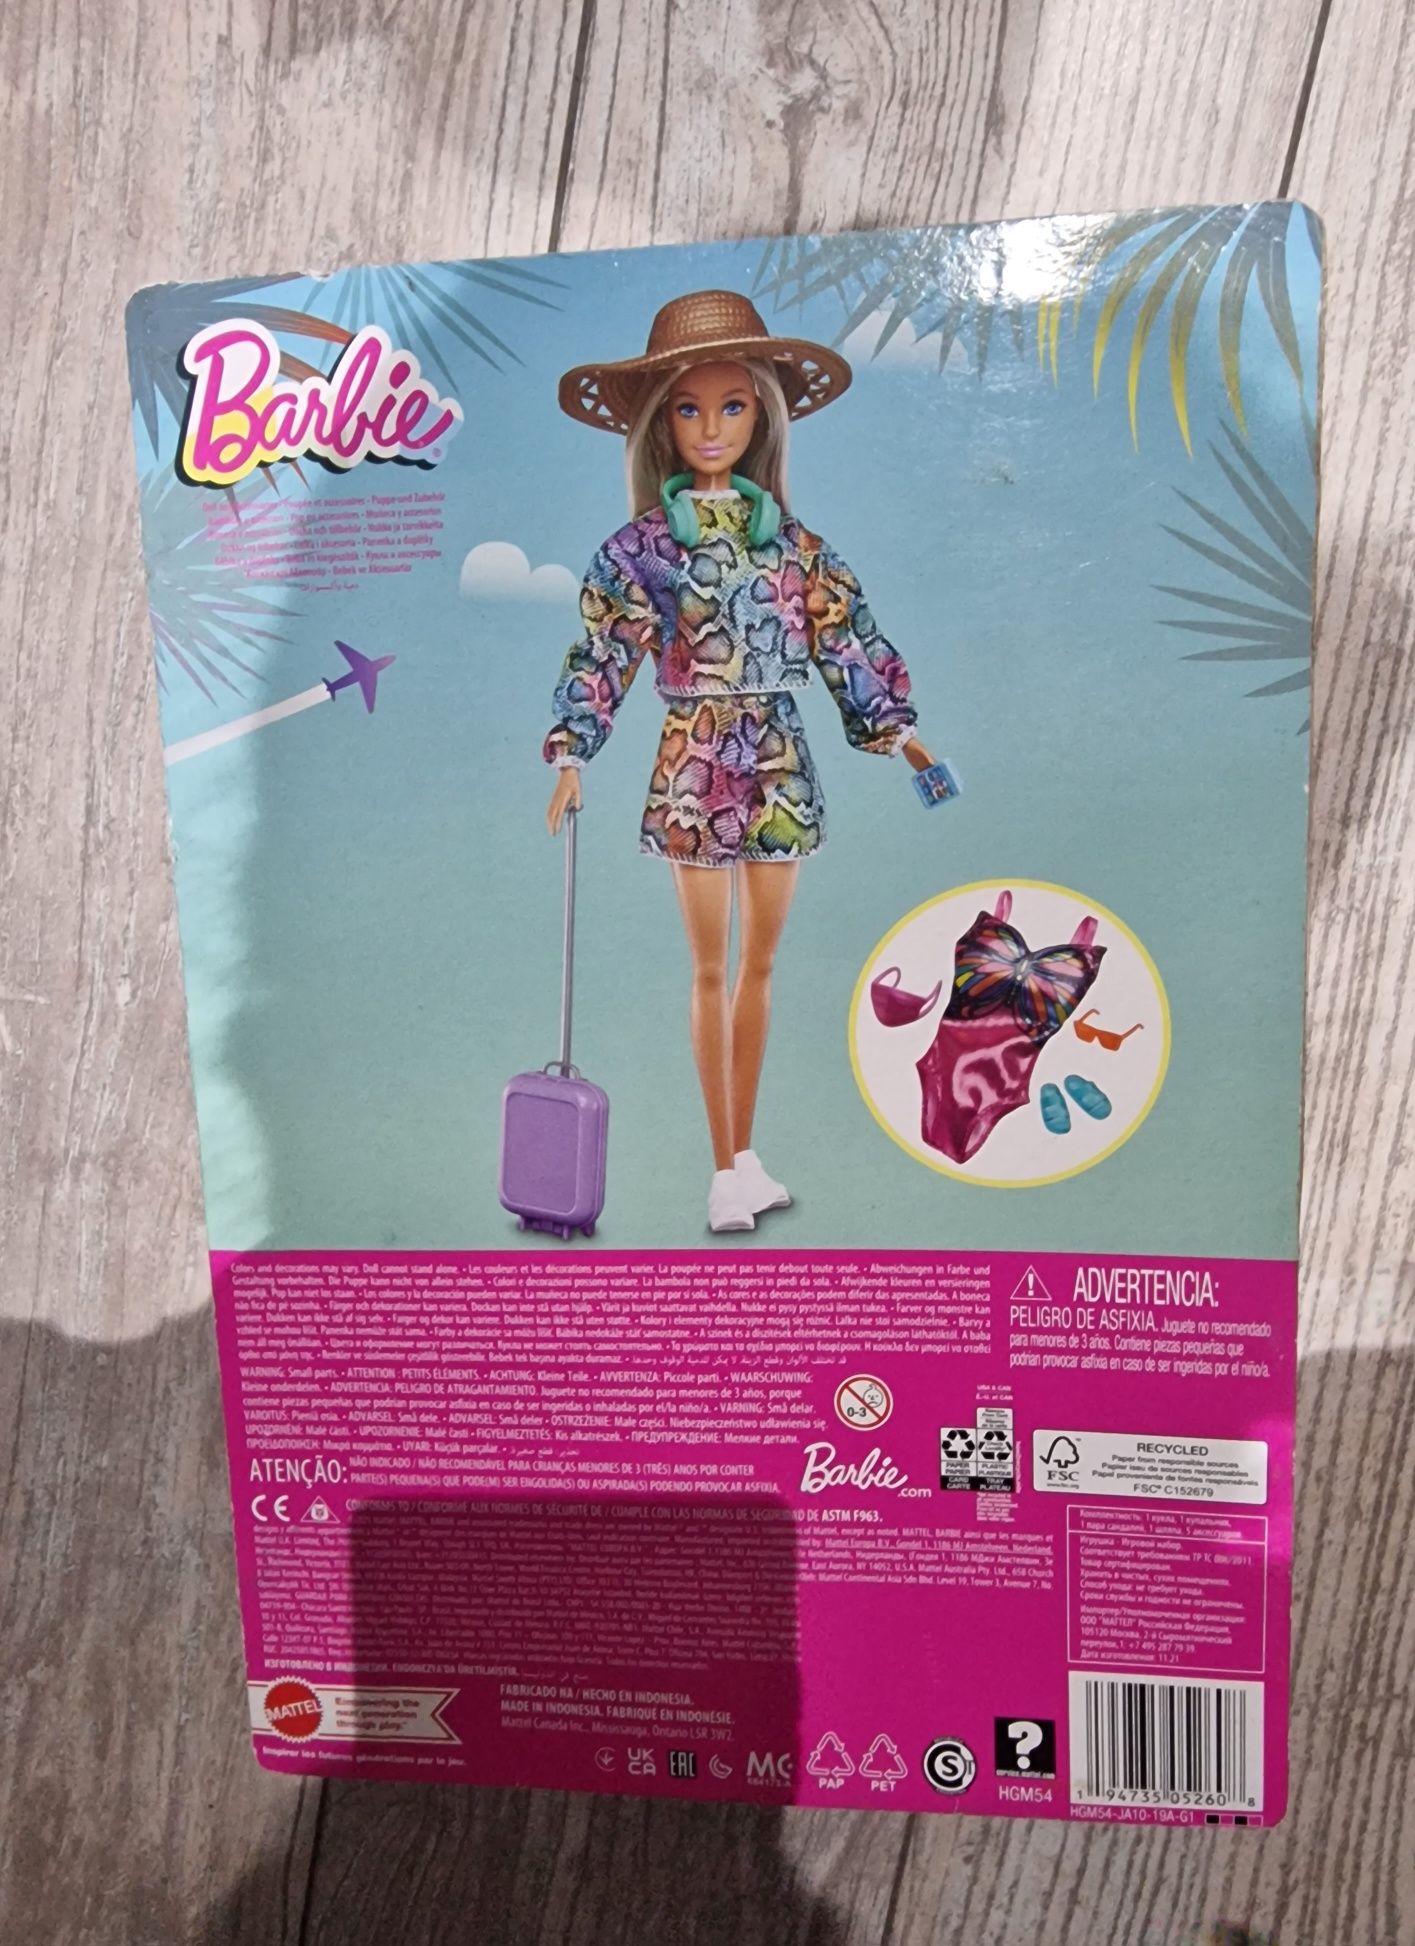 Barbie Wakacyjna zabawa Lalka + akcesoria hgm54